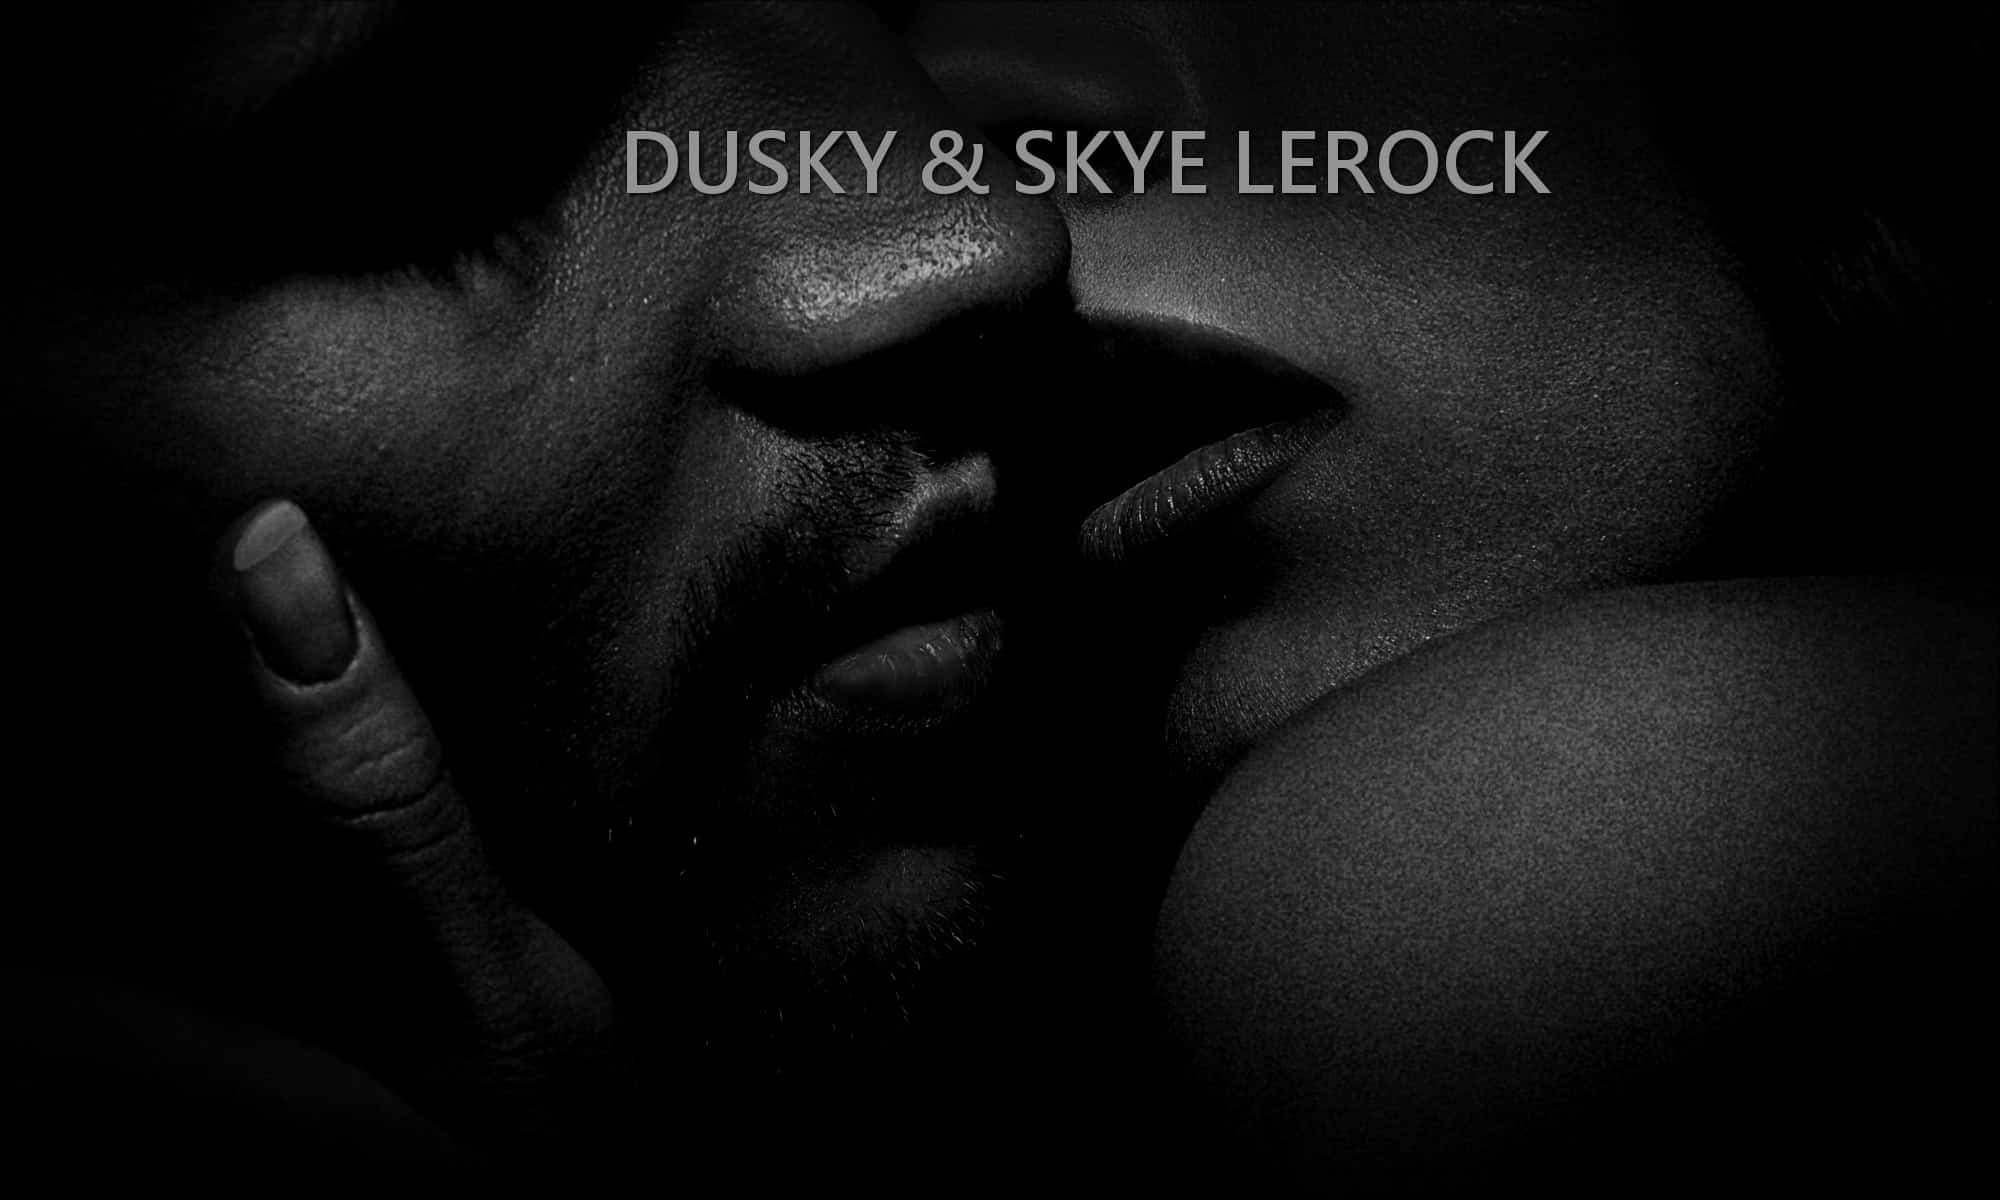 SKYE & DUSKY LEROCK, Erotica, Contemporary, Romance, Short Stories, Action & Adventure, Holiday, Kindle books